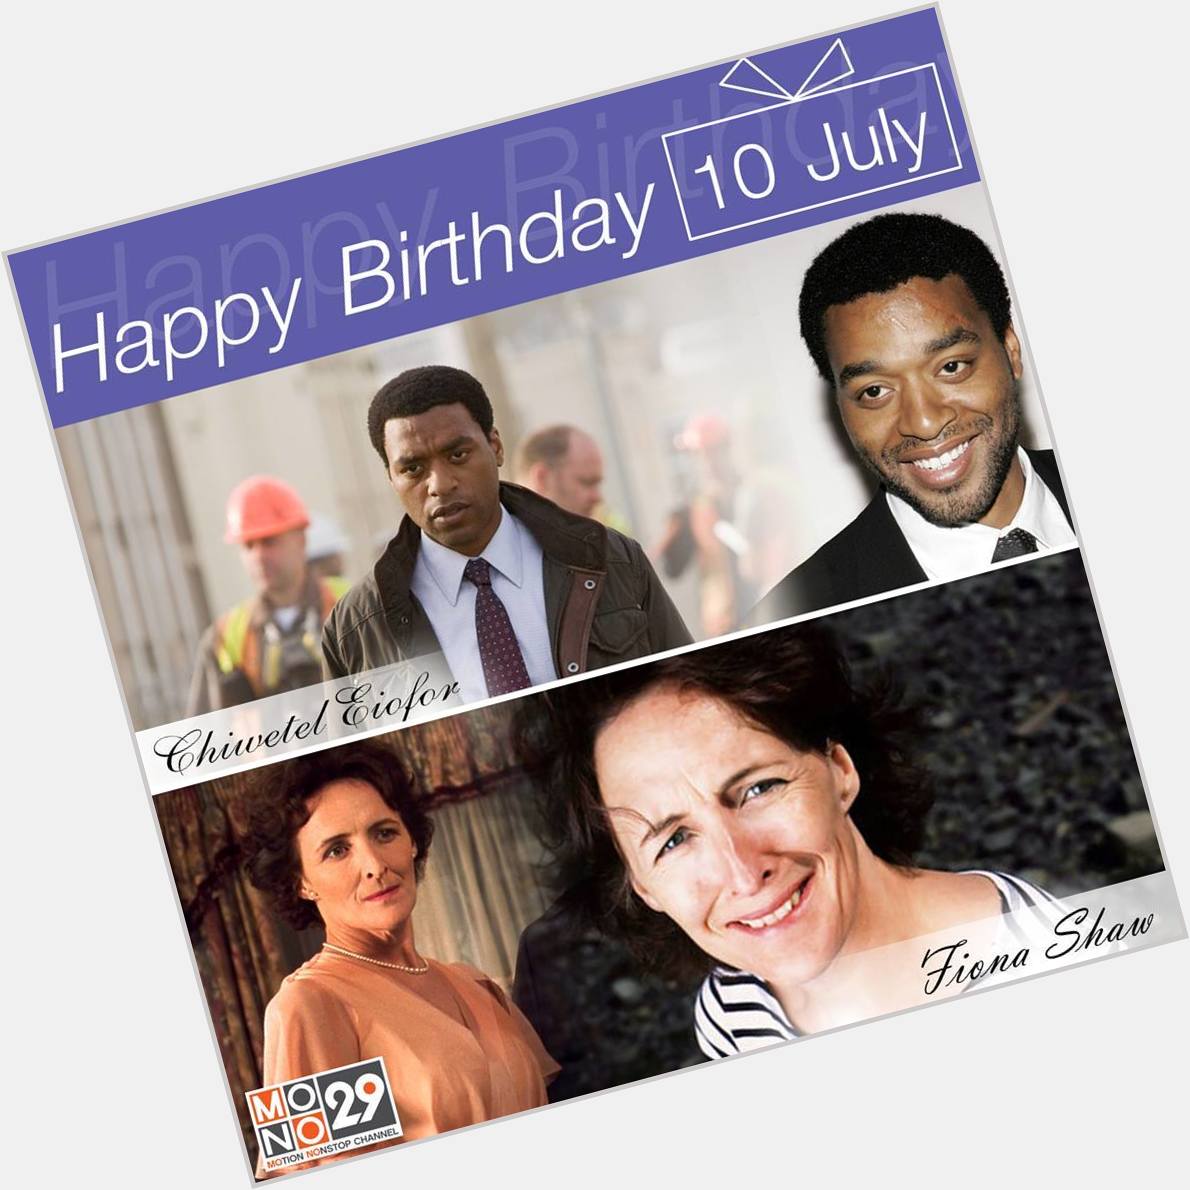 10 July Happy Birthday
Chiwetel Ejiofor / Fiona Shaw                             2                            ? 